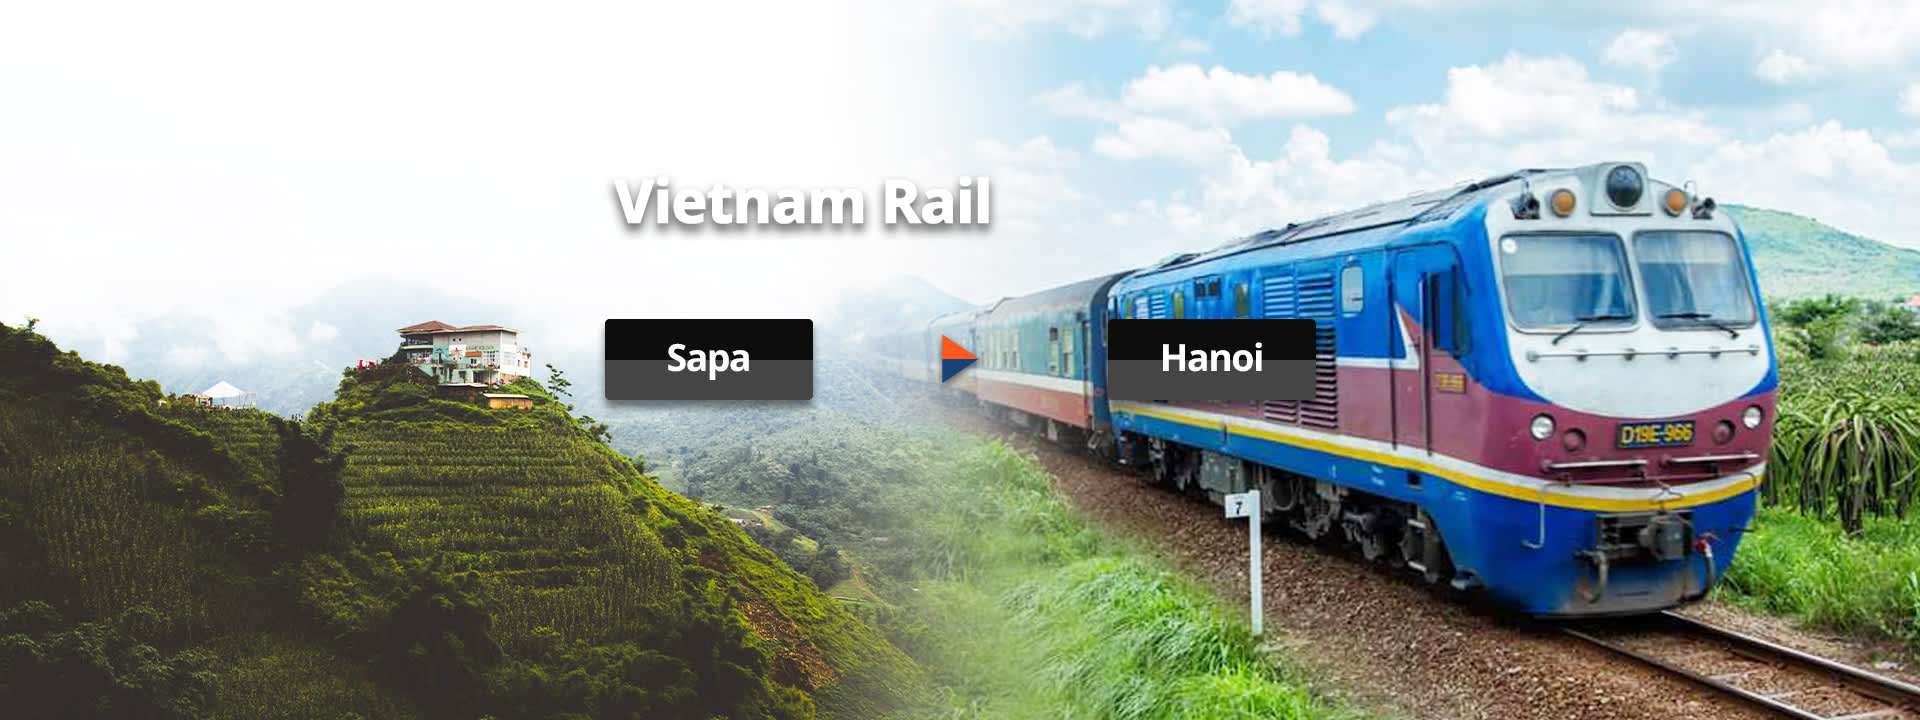  Vietnam Rail Sapa To Hanoi %2528One Way%2529 By Superior Violette Dream Express Train 2b0fbf94 Eed7 4ae8 Bcb5 0e9172840c8d ? Src=imagekit&tr=dpr 3